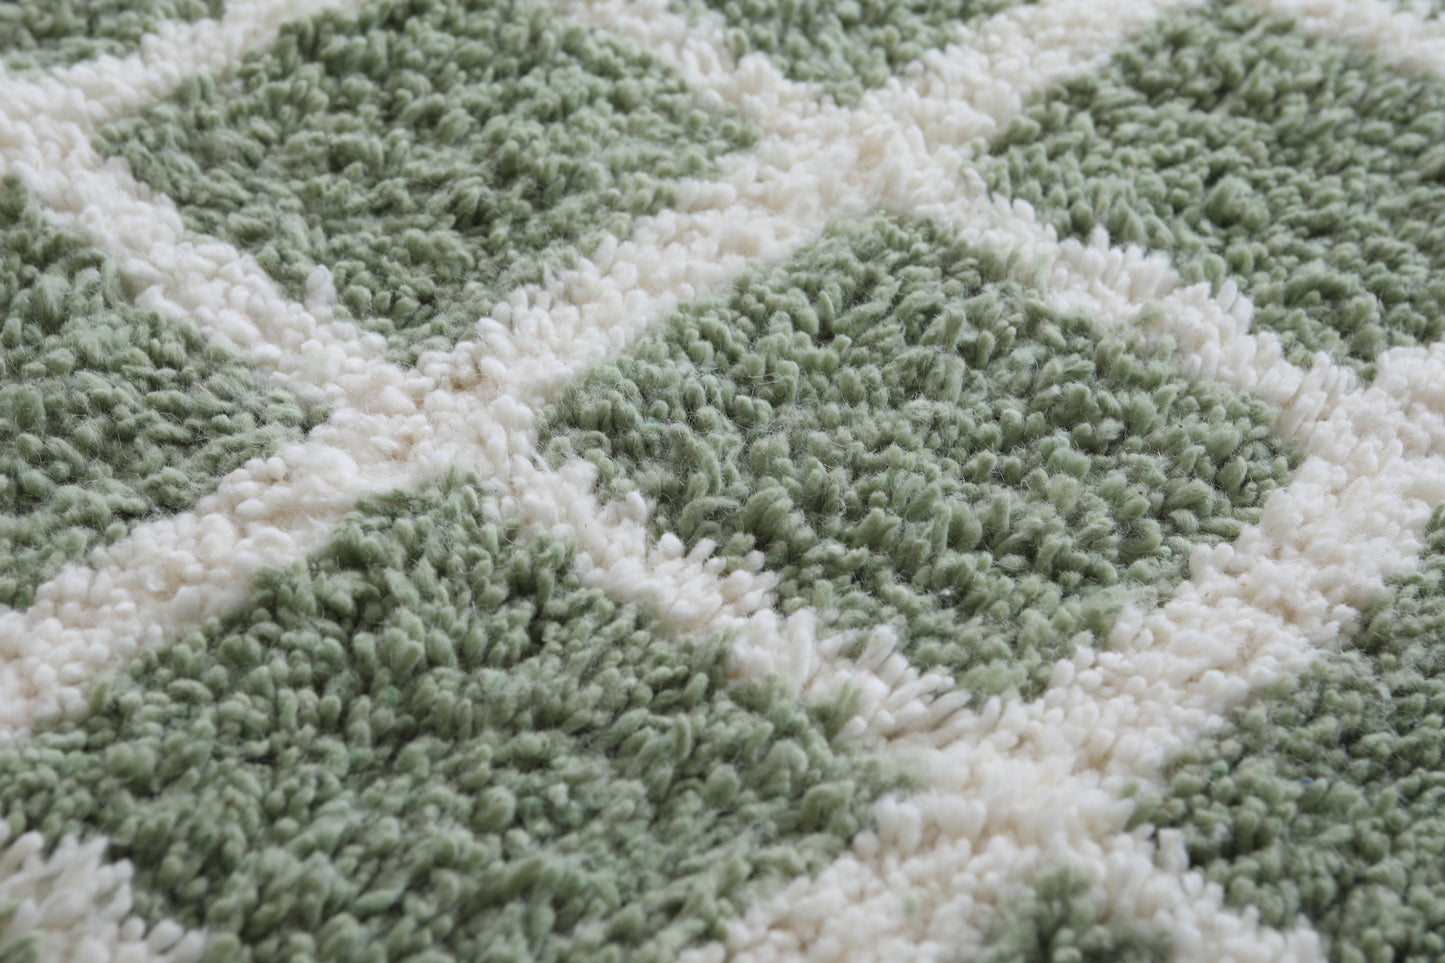 Moroccan Green checkered rug - Checkered rug - Moroccan rug